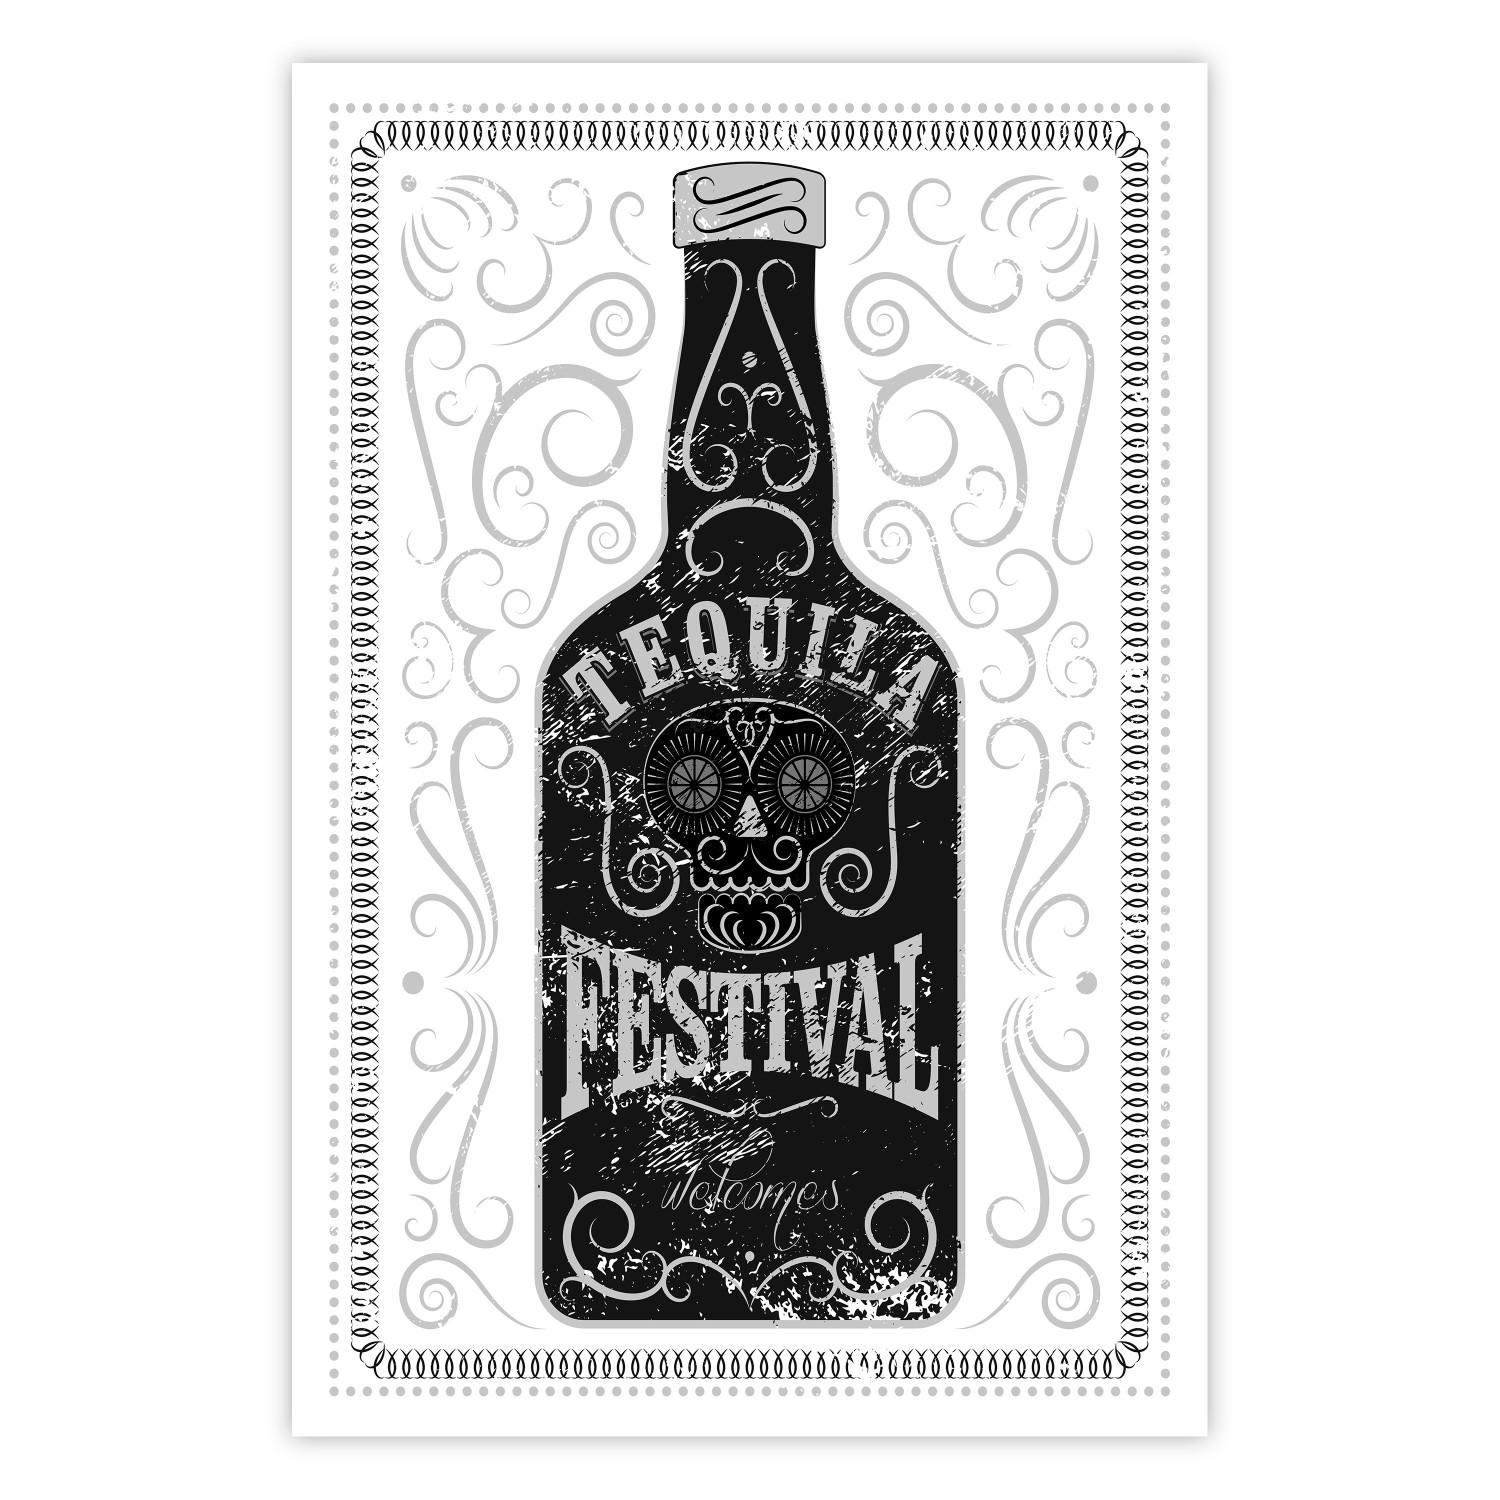 Cartel Festival del Tequila: botella de alcohol